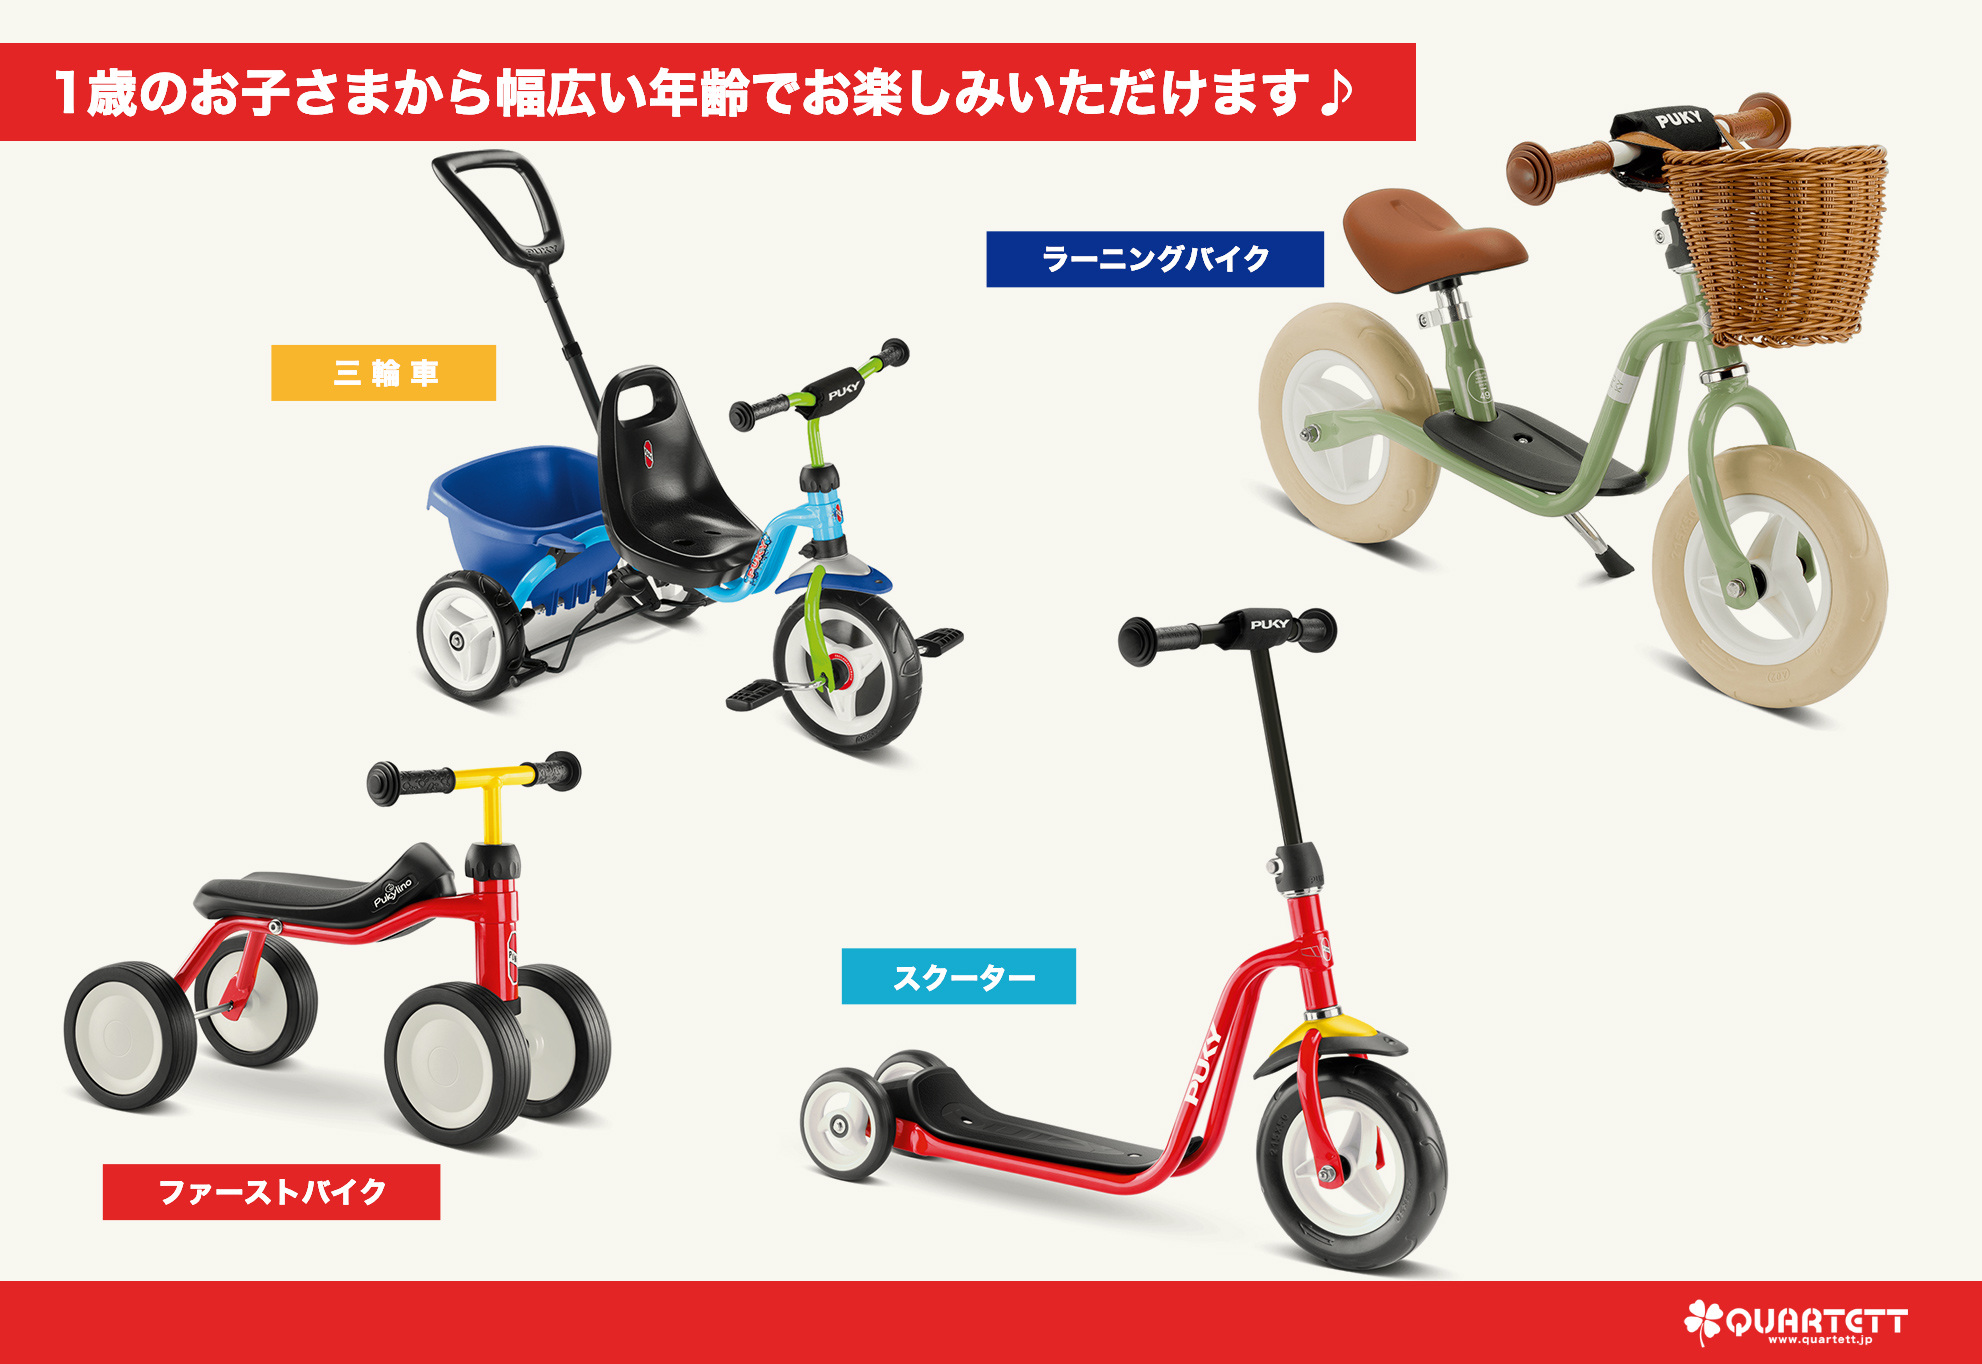 PUKY日本正規販売店QUARTETT 木のおもちゃと輸入おもちゃと絵本のカルテット